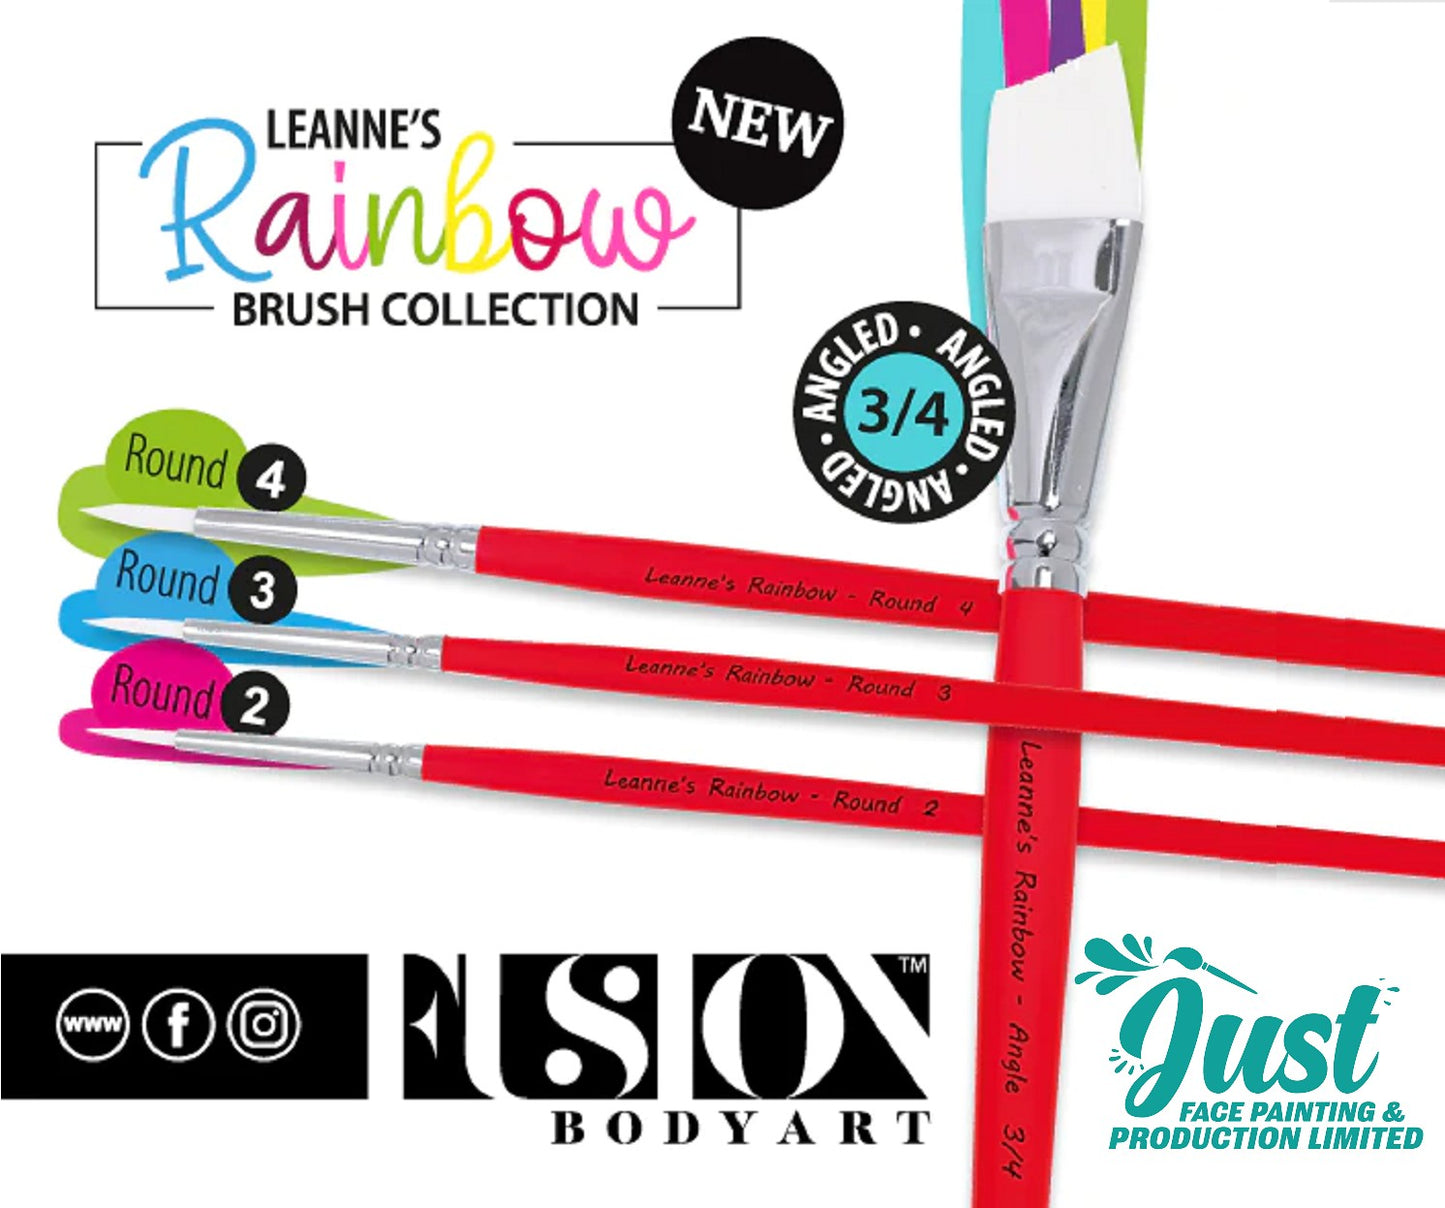 Fusion brush - LEANNE'S RAINBOW - Face Painting Brush with White Tacklon Bristles - 3/4 Angled Brush